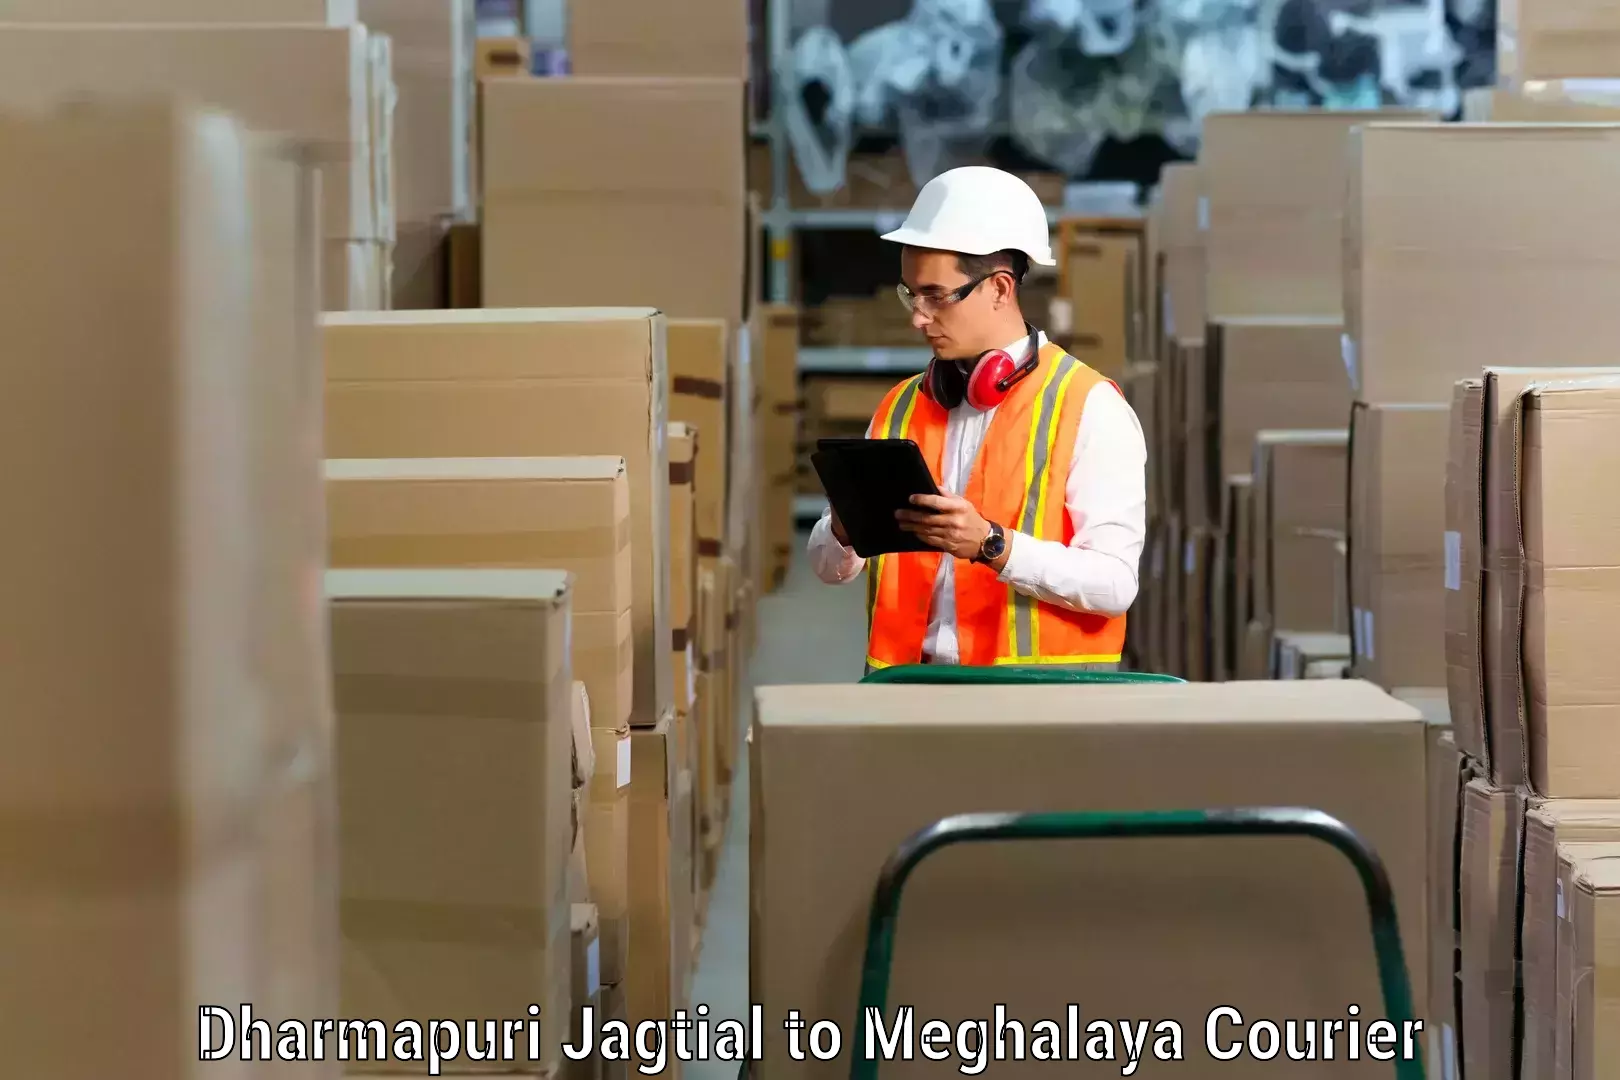 Budget-friendly movers Dharmapuri Jagtial to Tura